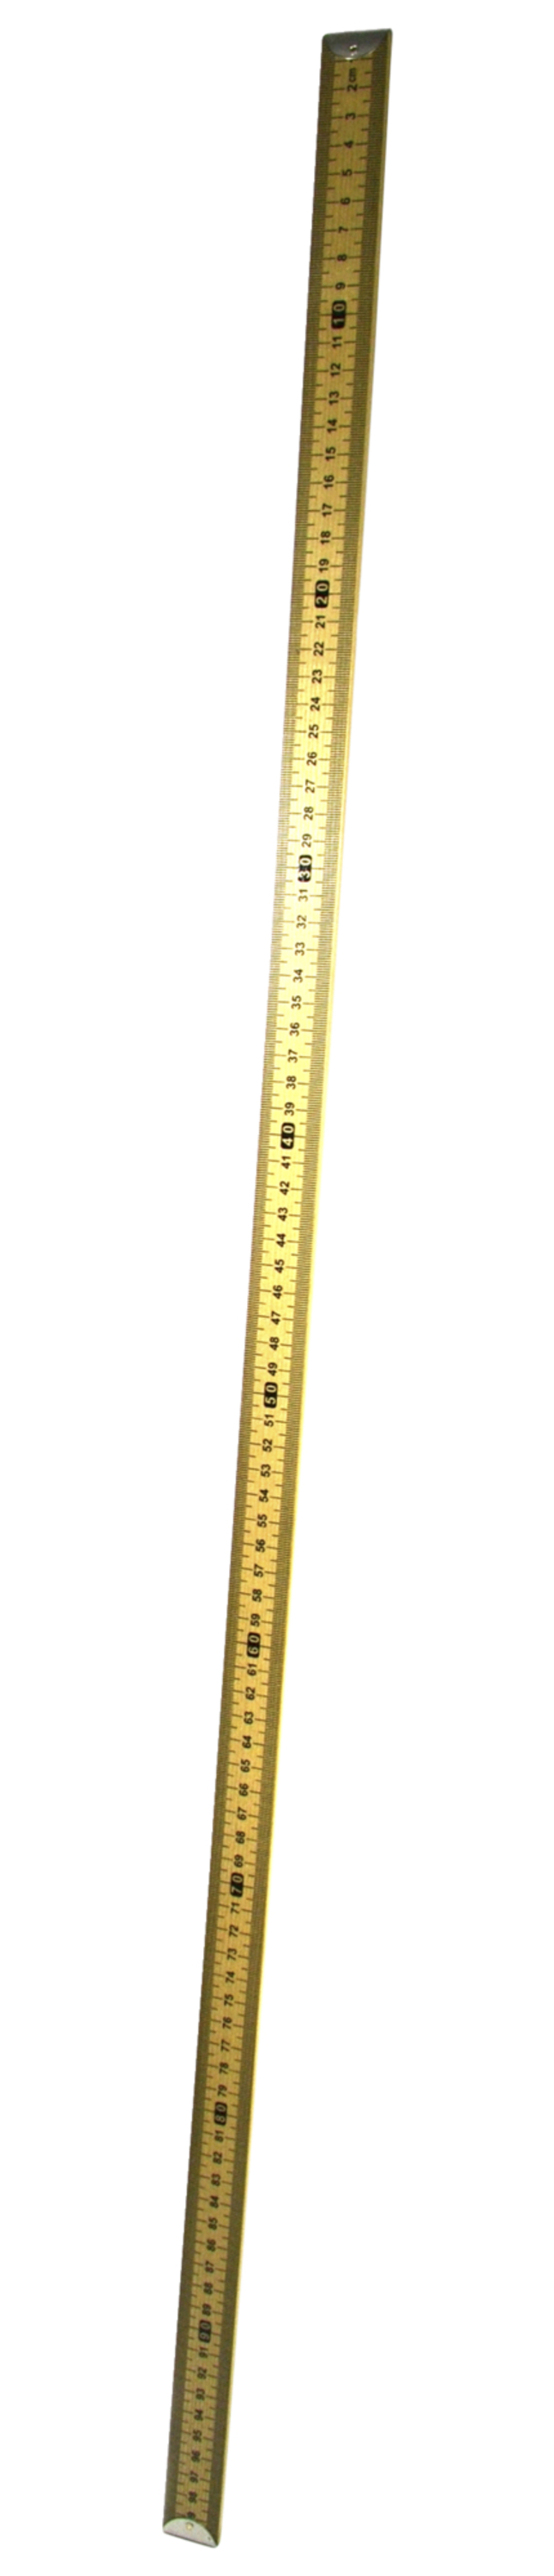 Wooden Meter Stick: Plain Edge - Measurement